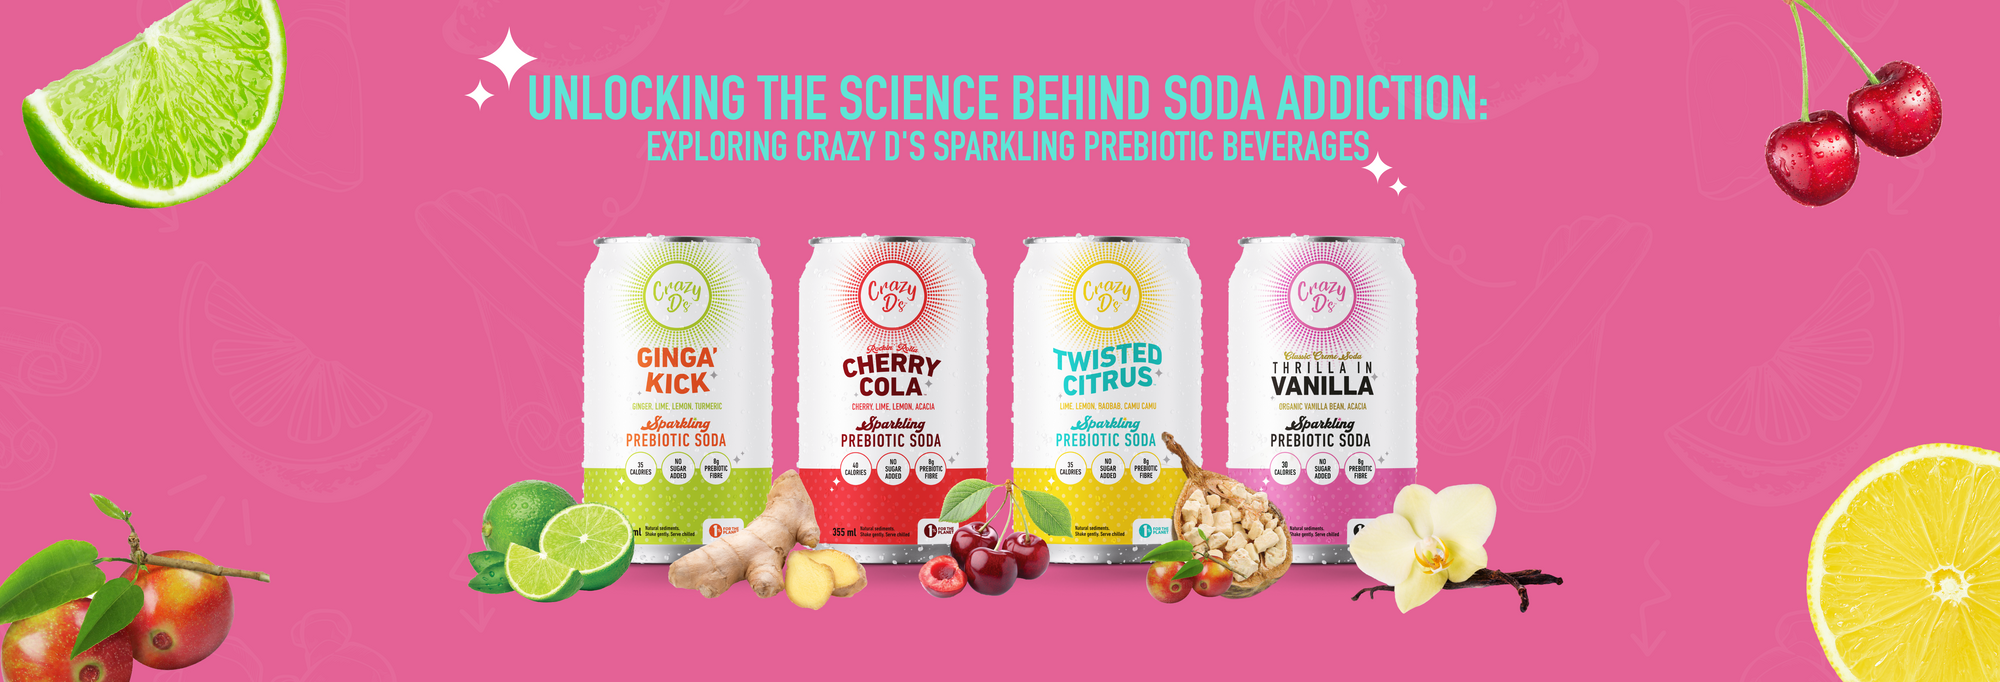 Unlocking the Science Behind Soda Addiction: Exploring Crazy D's Sparkling Prebiotic Beverages